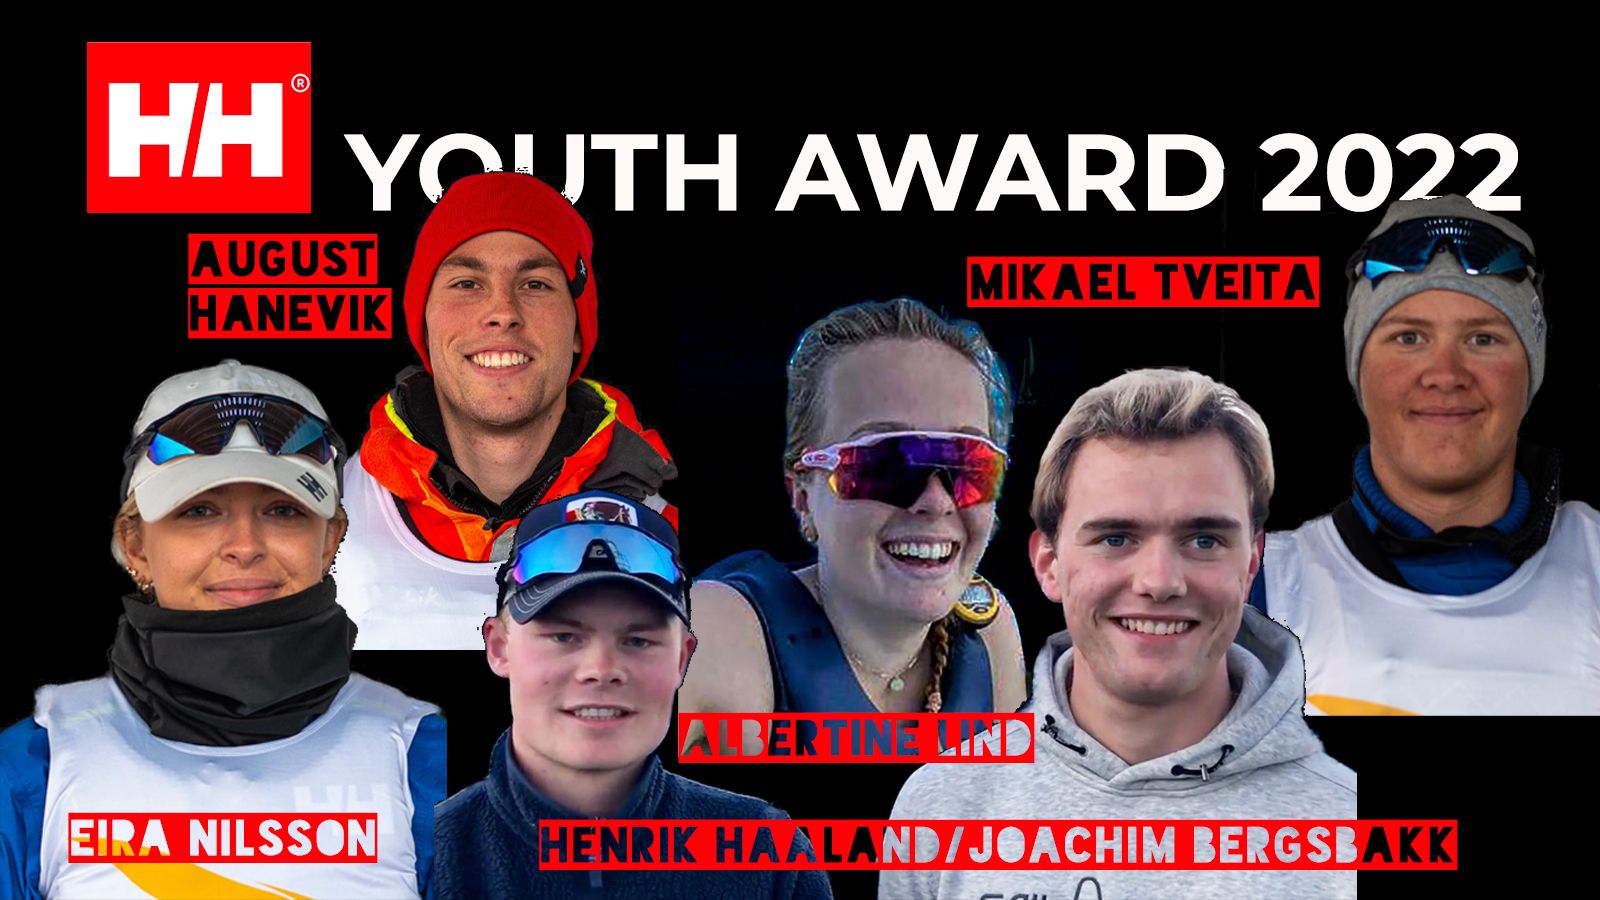 2022 HH Youth Award Fem kandidater